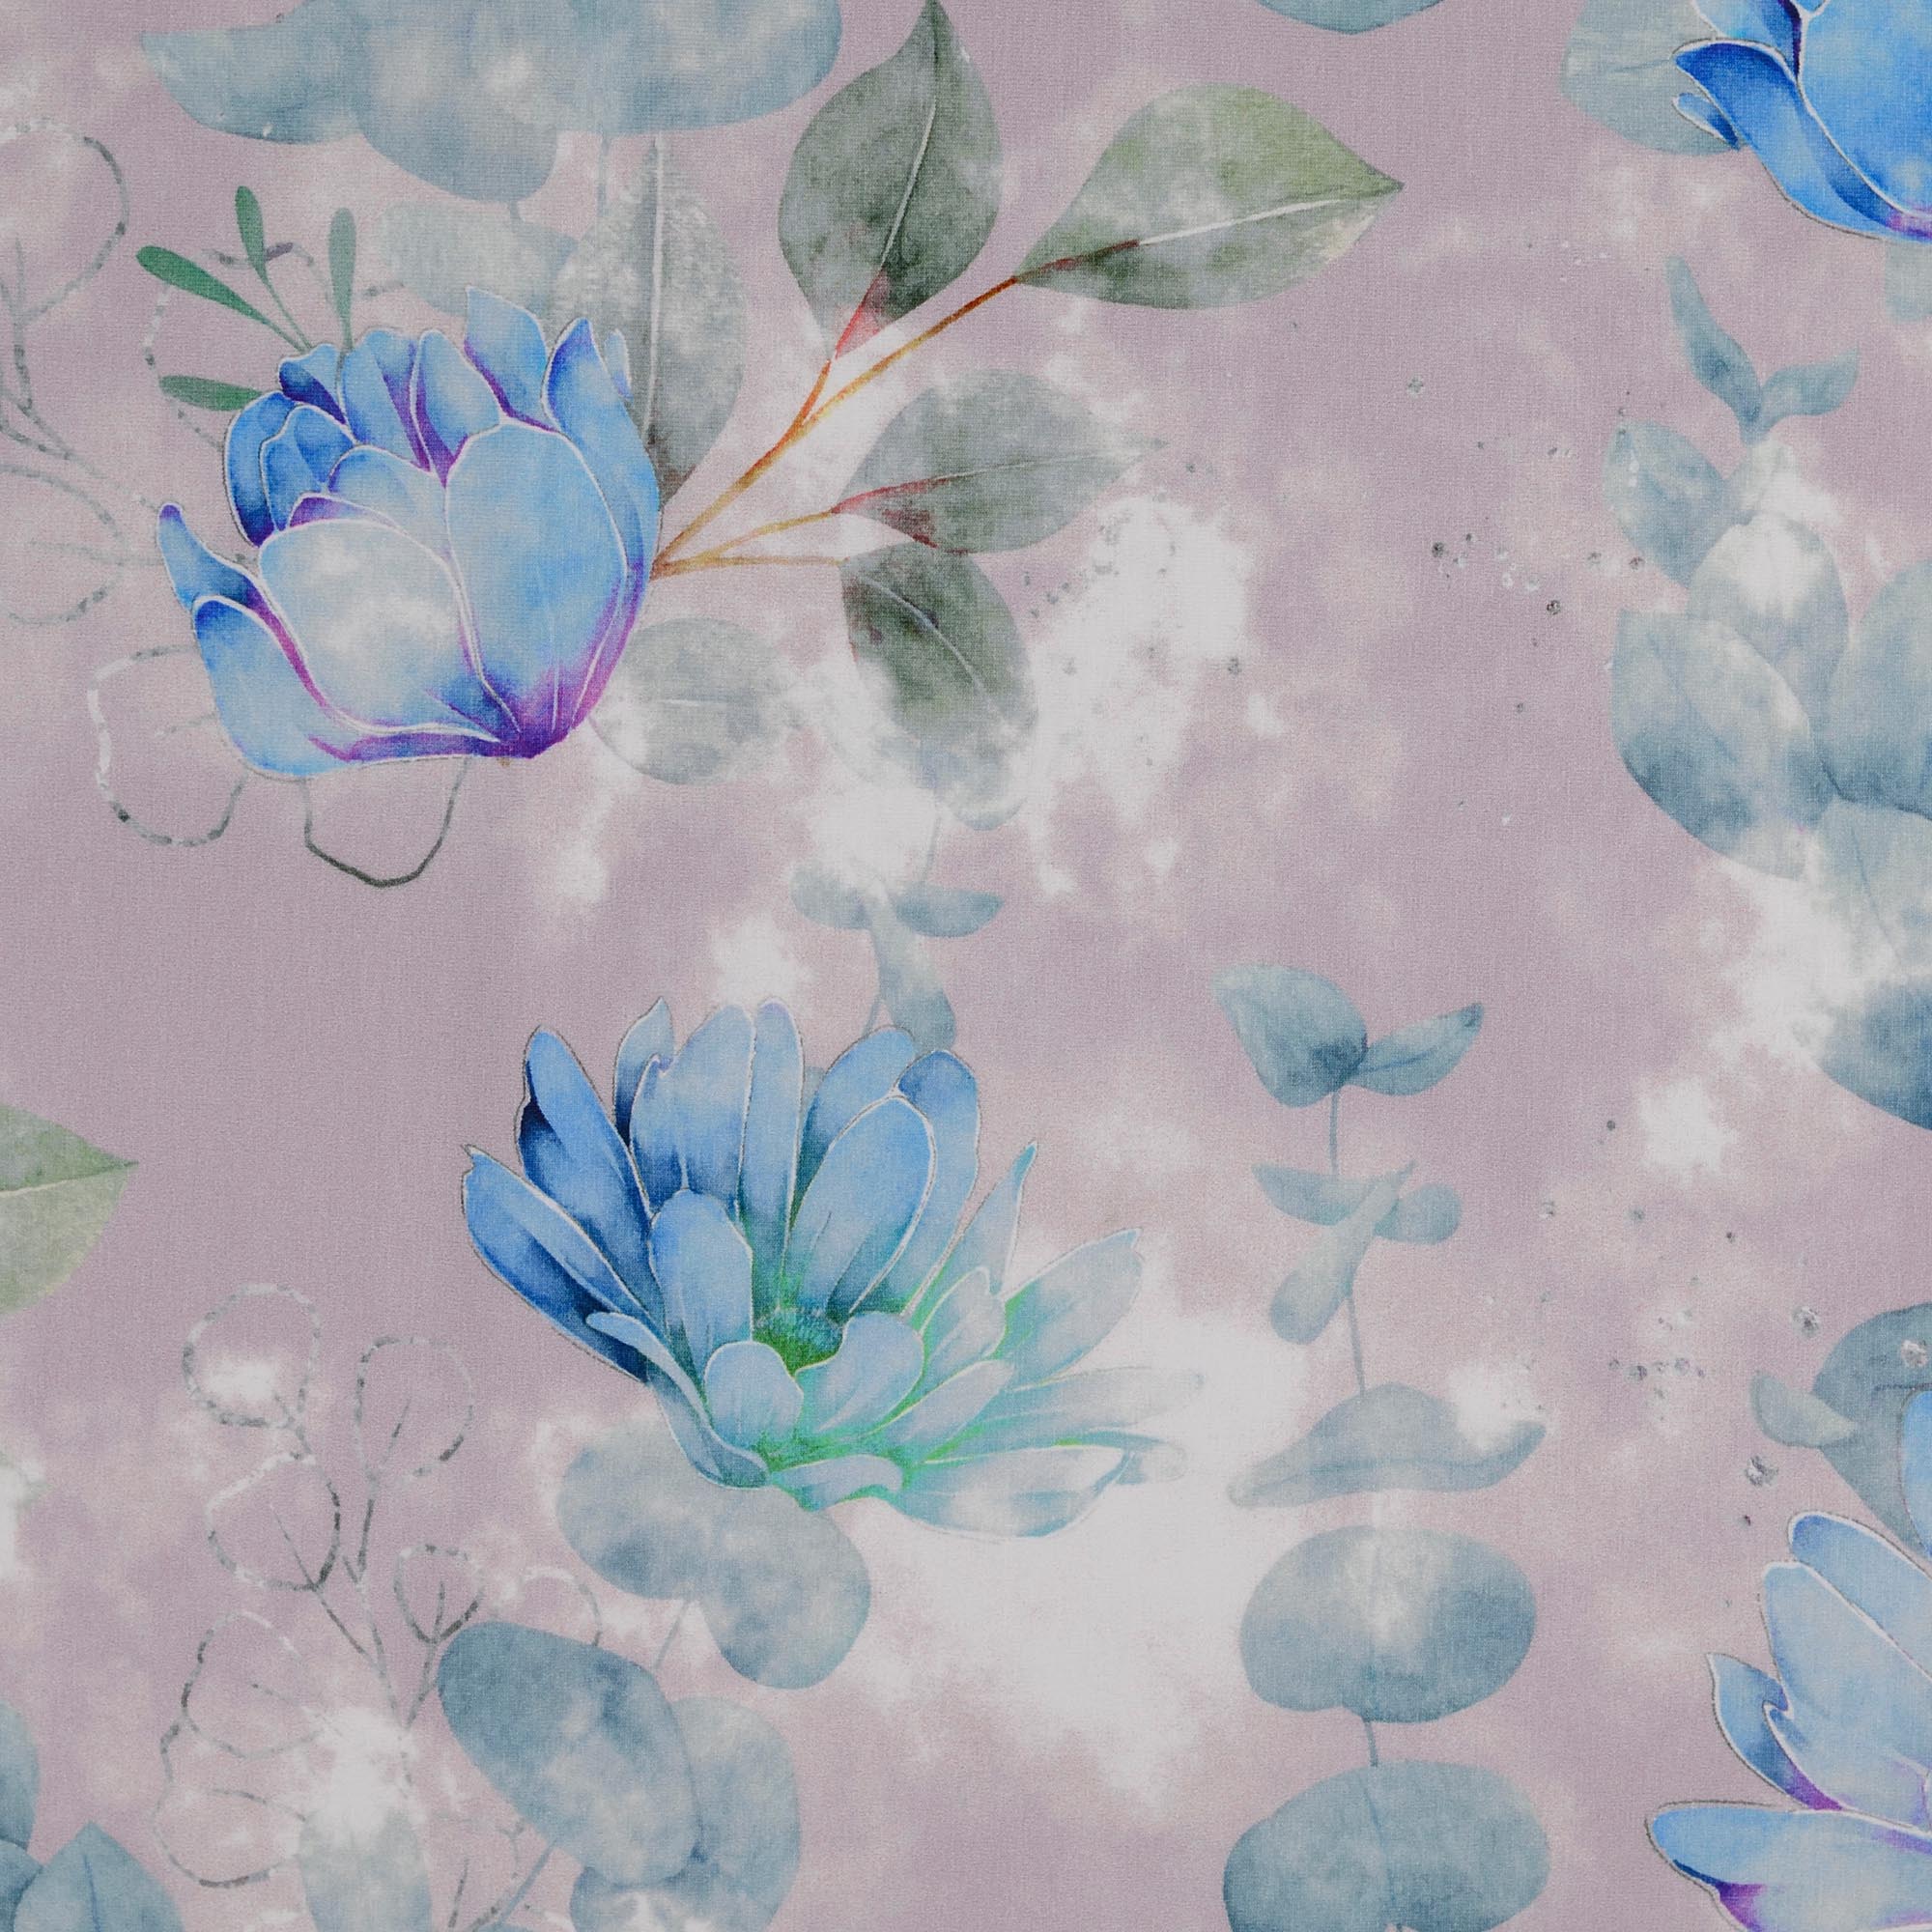 Baumwolljersey - Jersey Stoff - Motivjersey - Blumen in Blau auf Grau